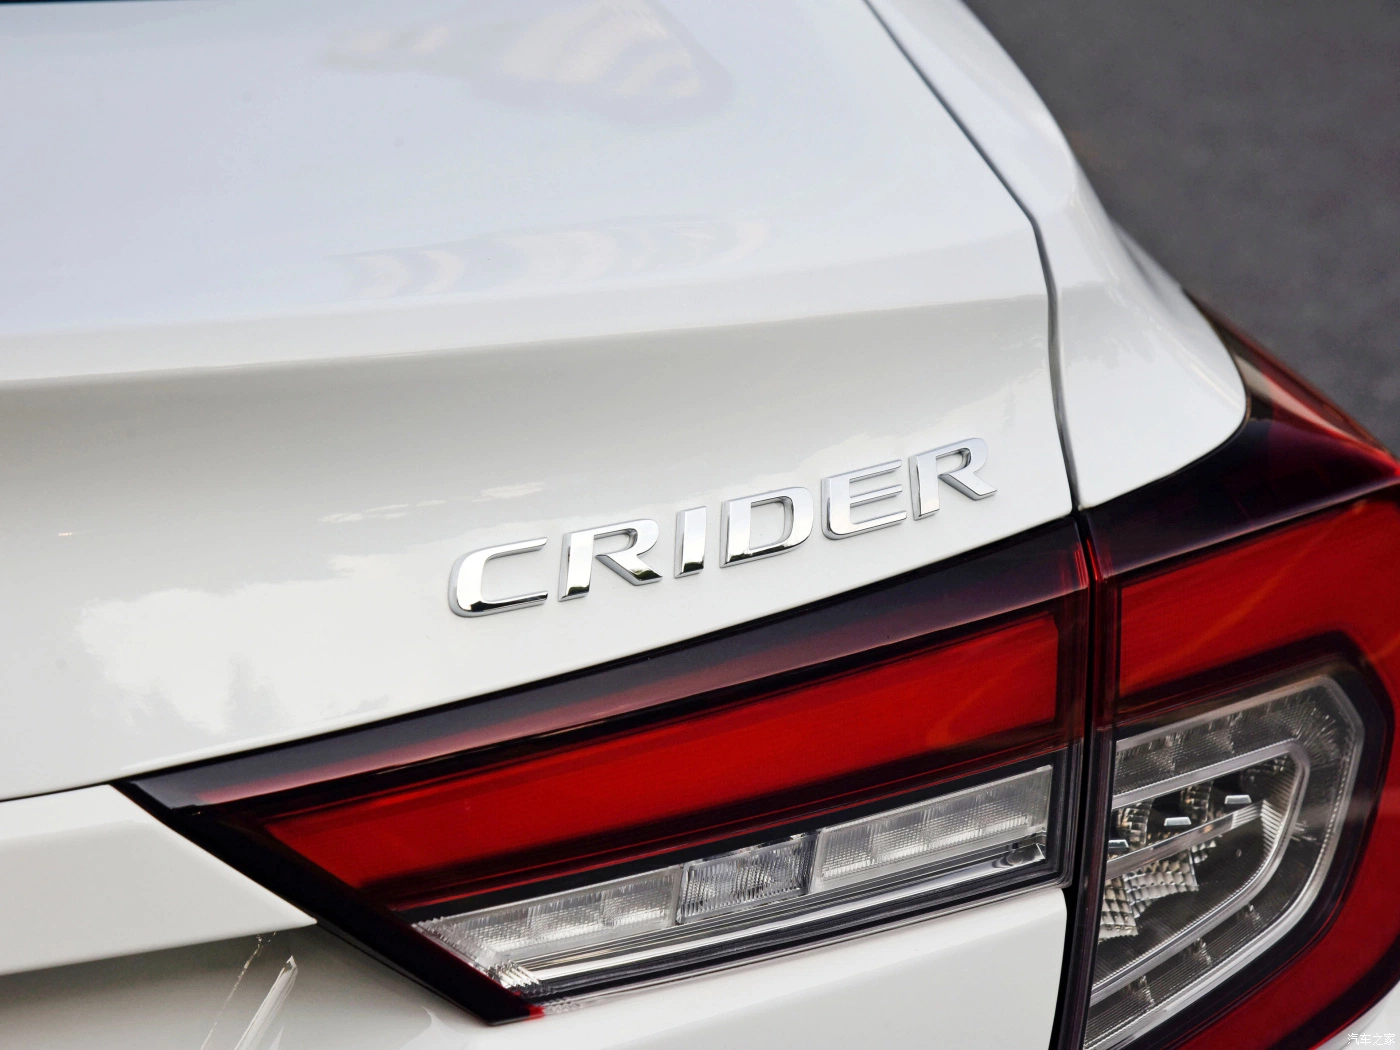 2023 Crider Honda 1.0t 180turbo CVT флагманской Edition бензин автомобильный